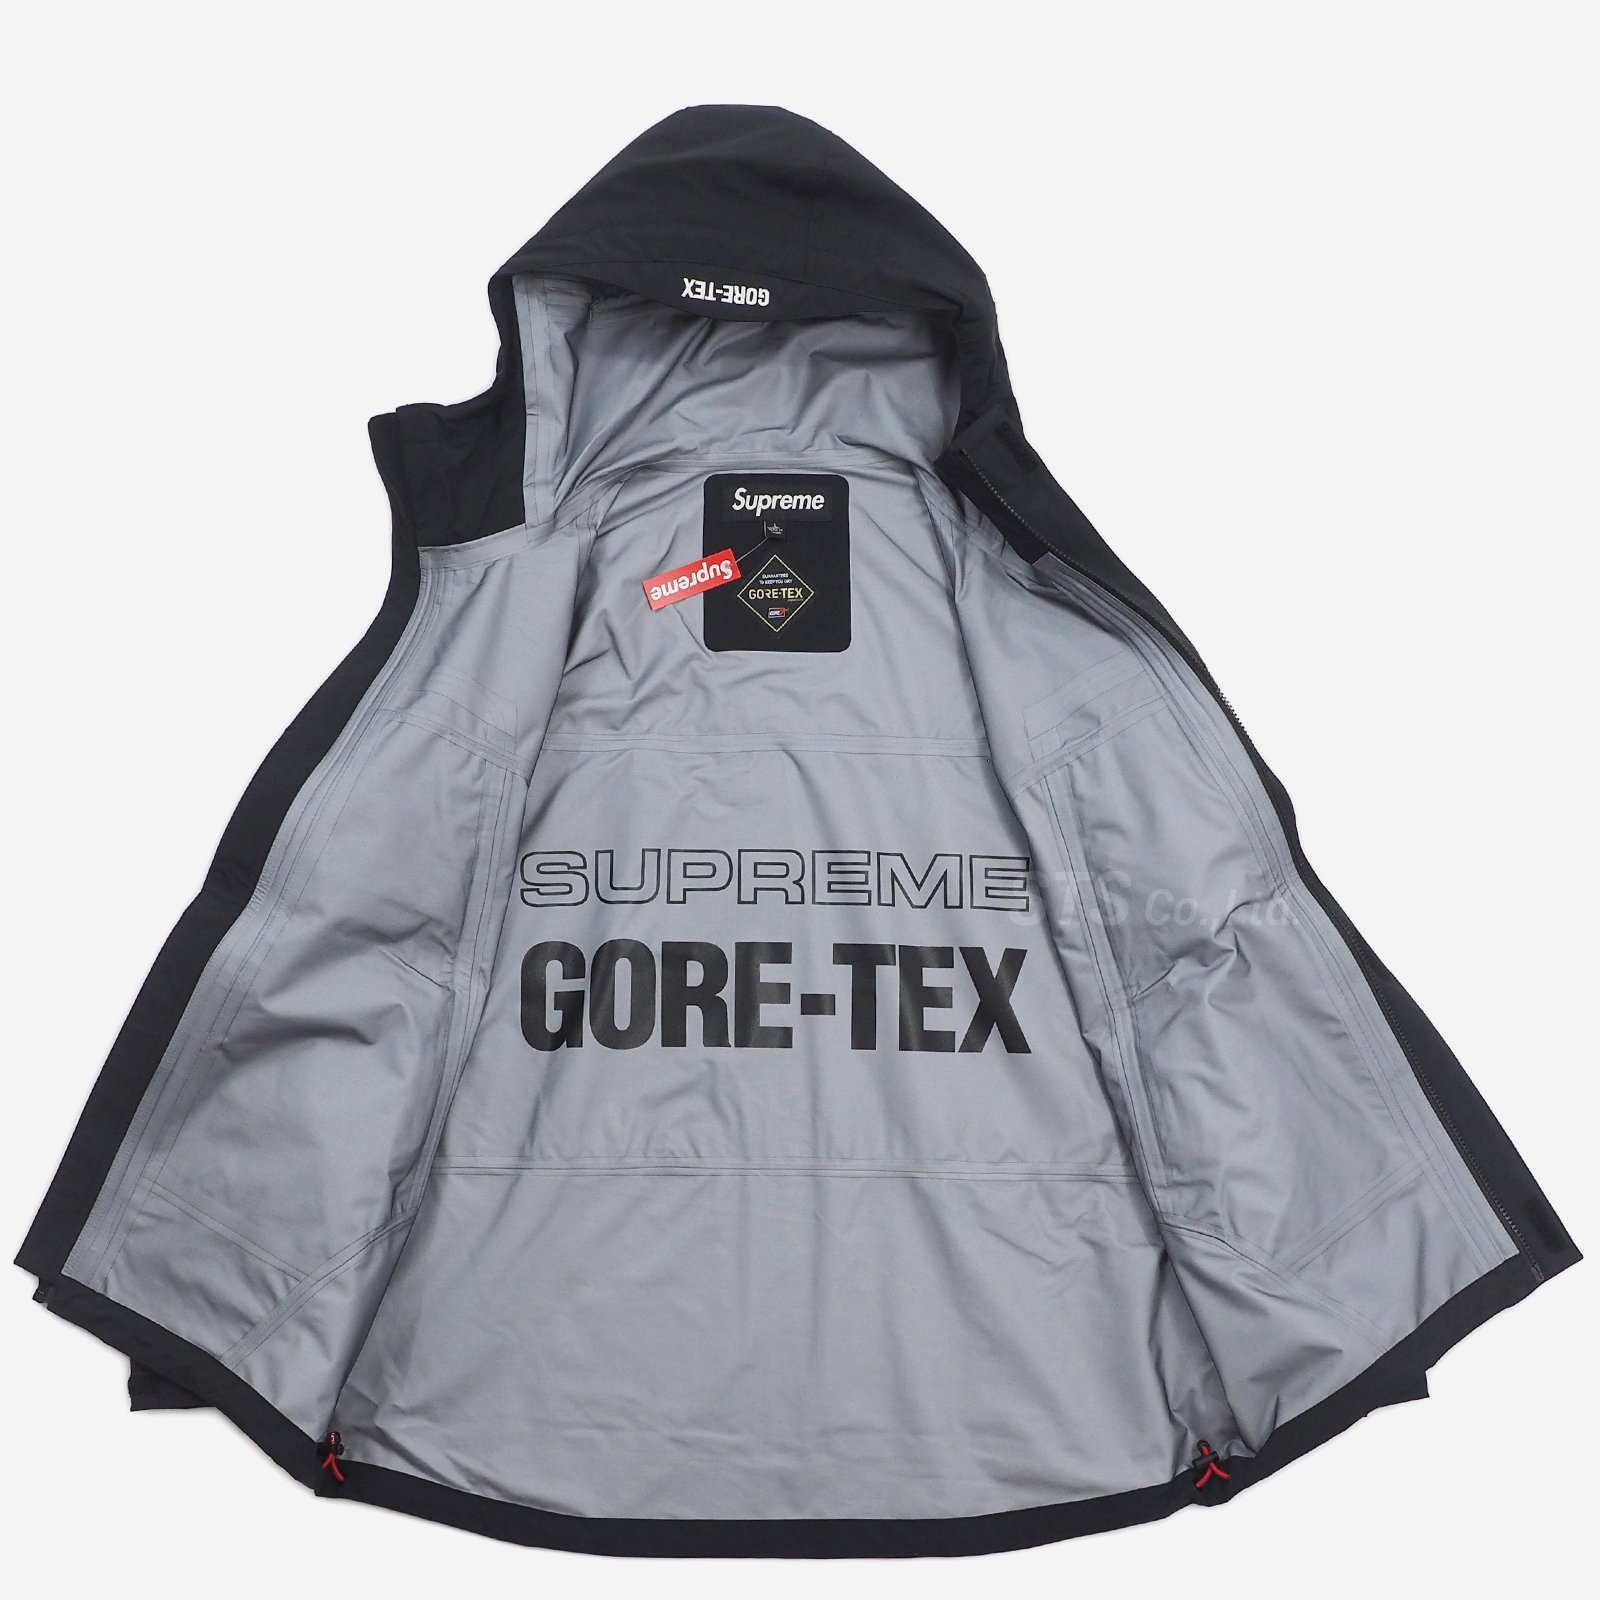 Supreme - GORE-TEX Taped Seam Jacket - ParkSIDER